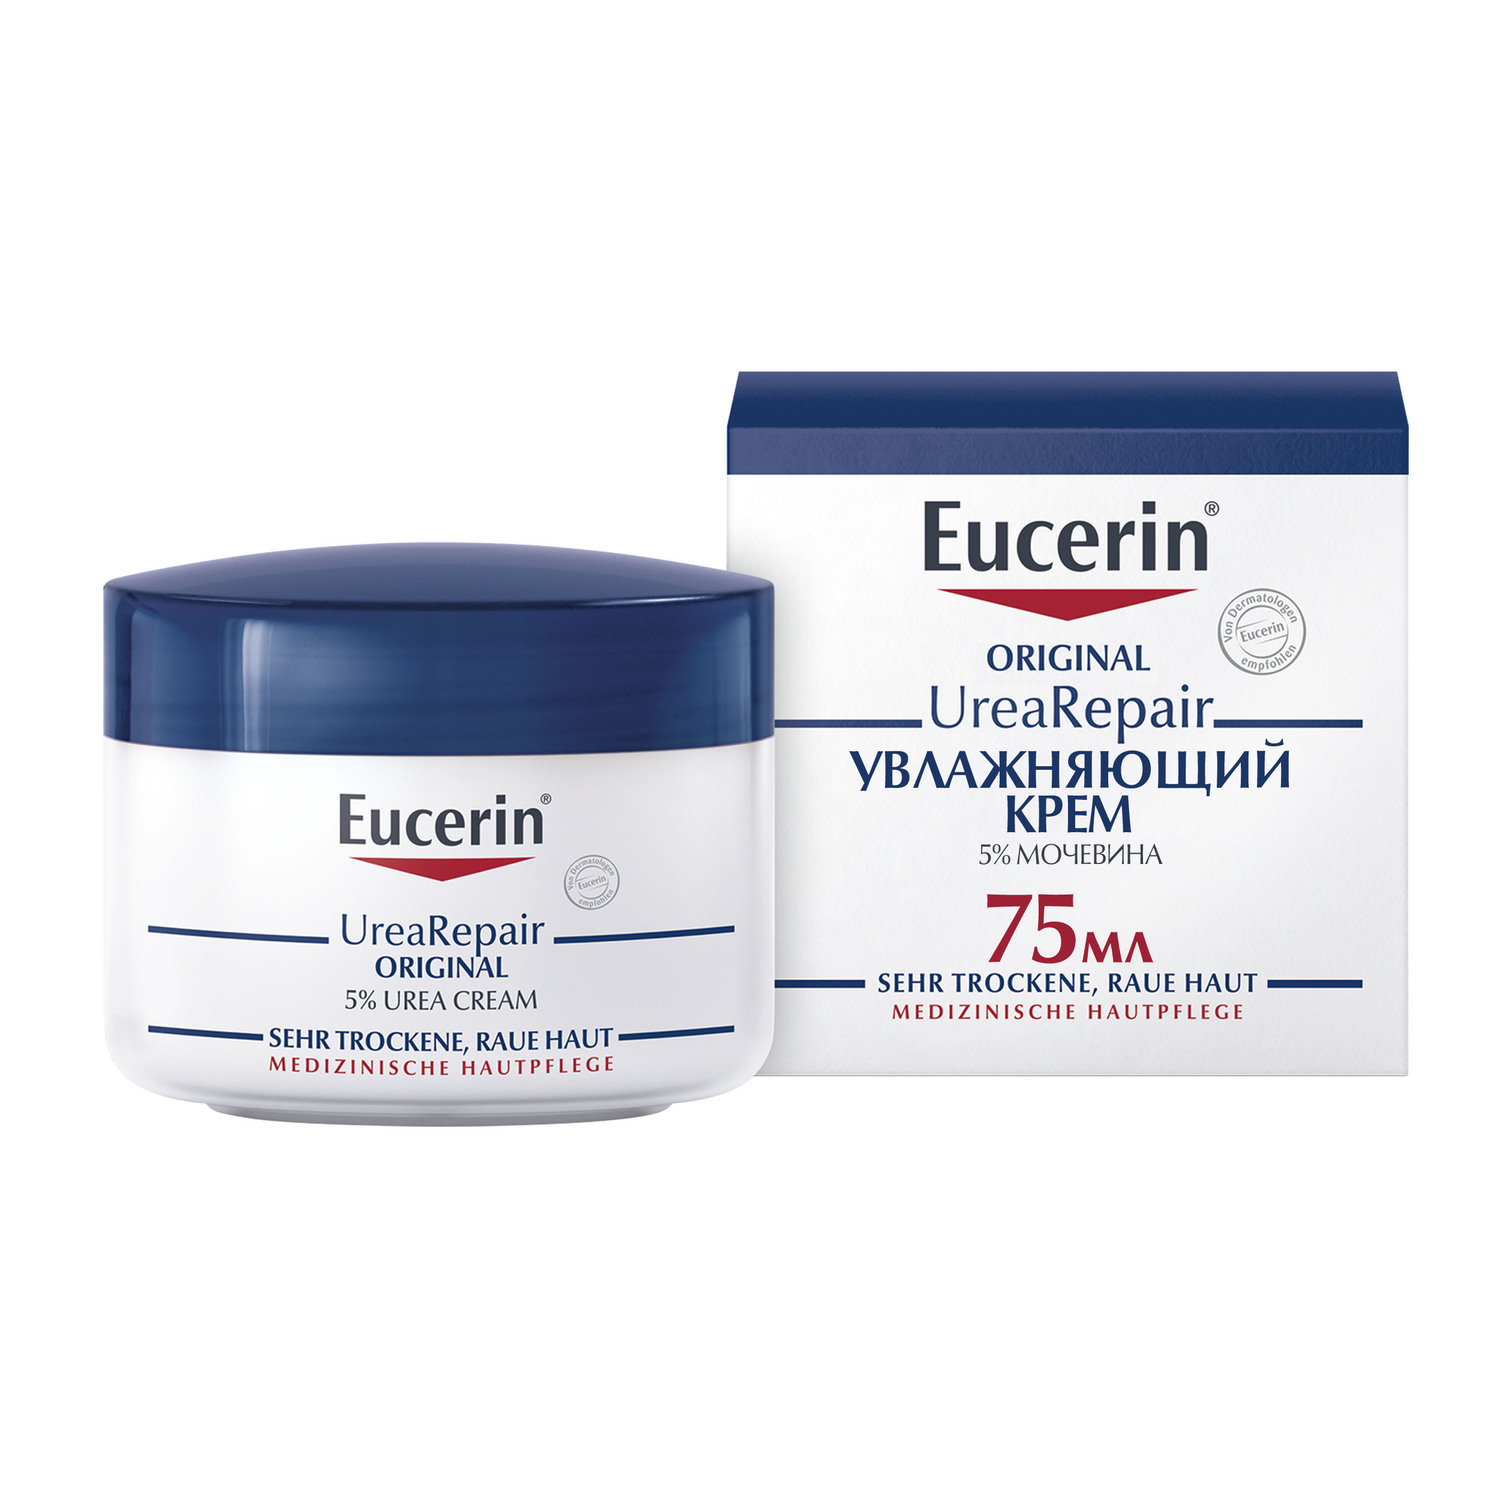 Eucerin Увлажняющий крем с 5% мочевиной, 75 мл (Eucerin, UreaRepair)